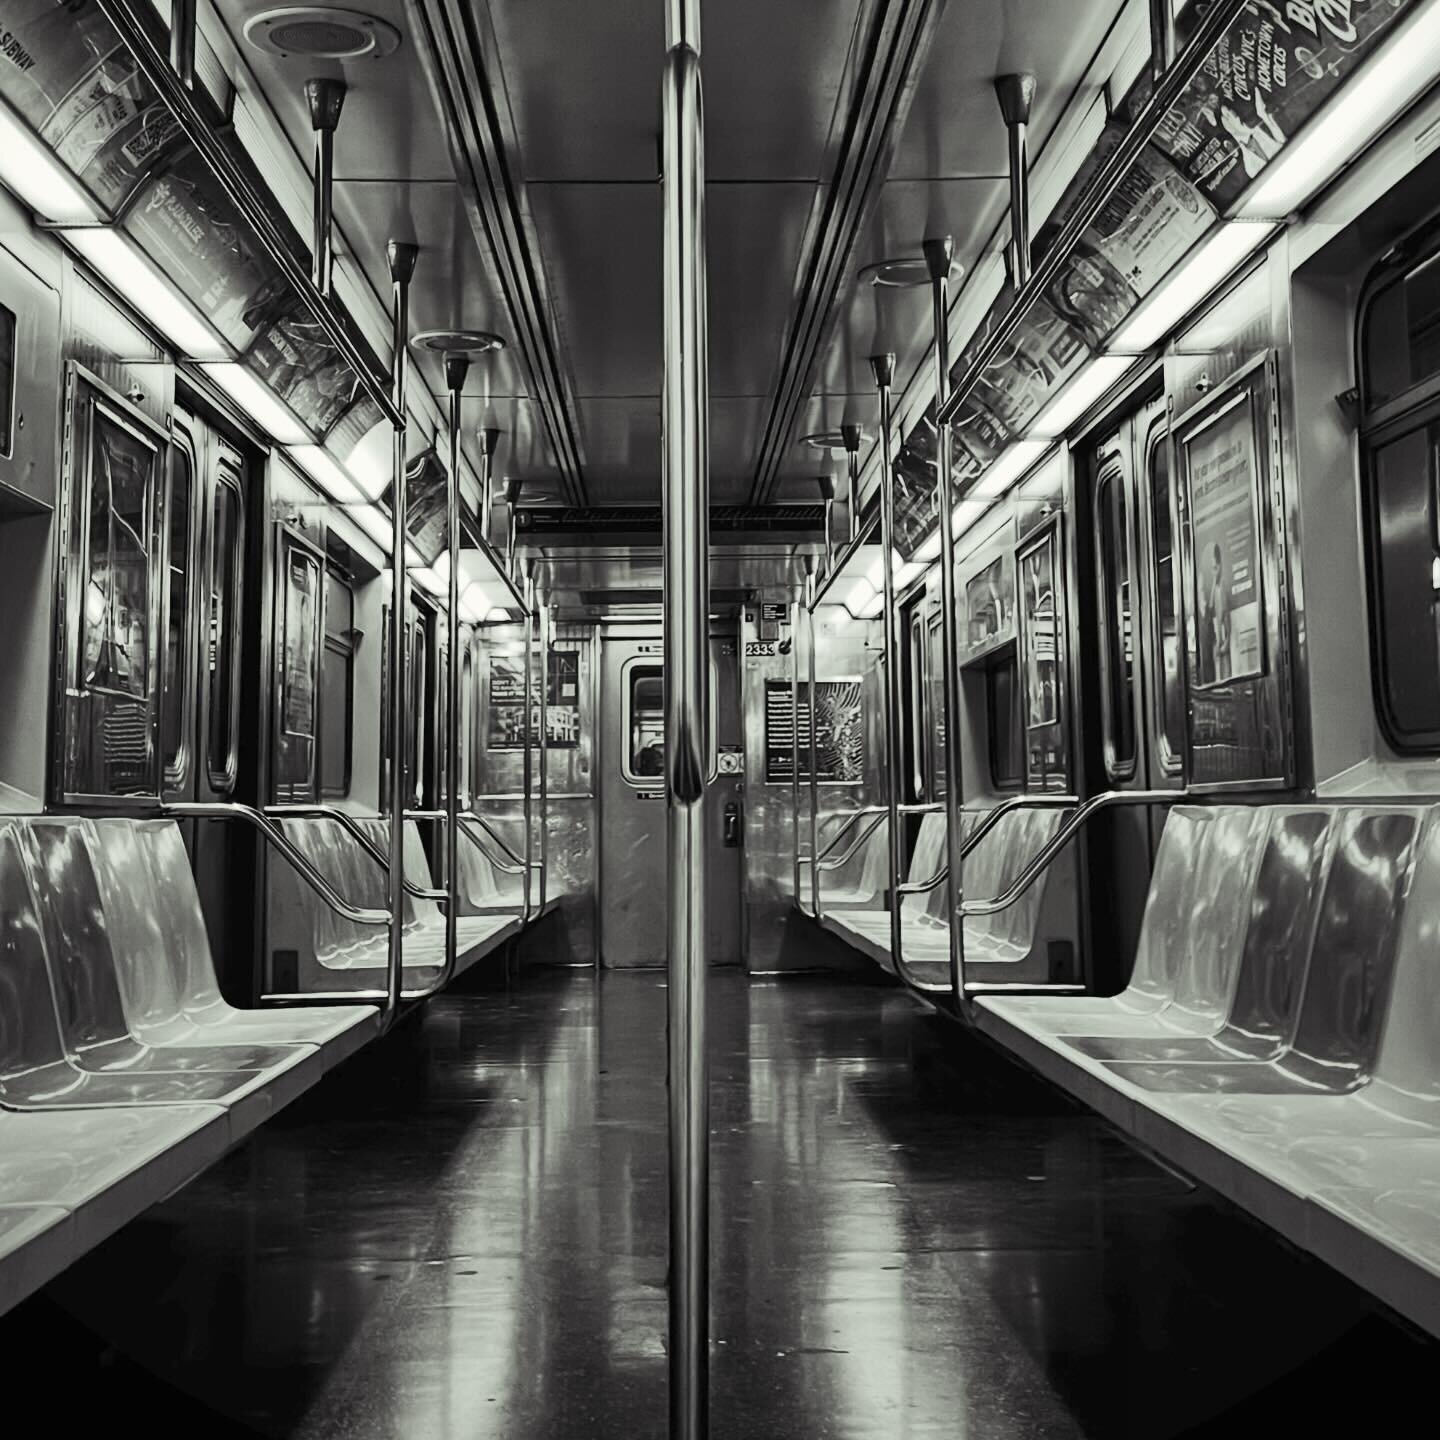 Night train.
.
.
#newyork #subway #mta #bnw #bnwphotography #bnwmood #bnwzone #bnwsouls #bnwphoto